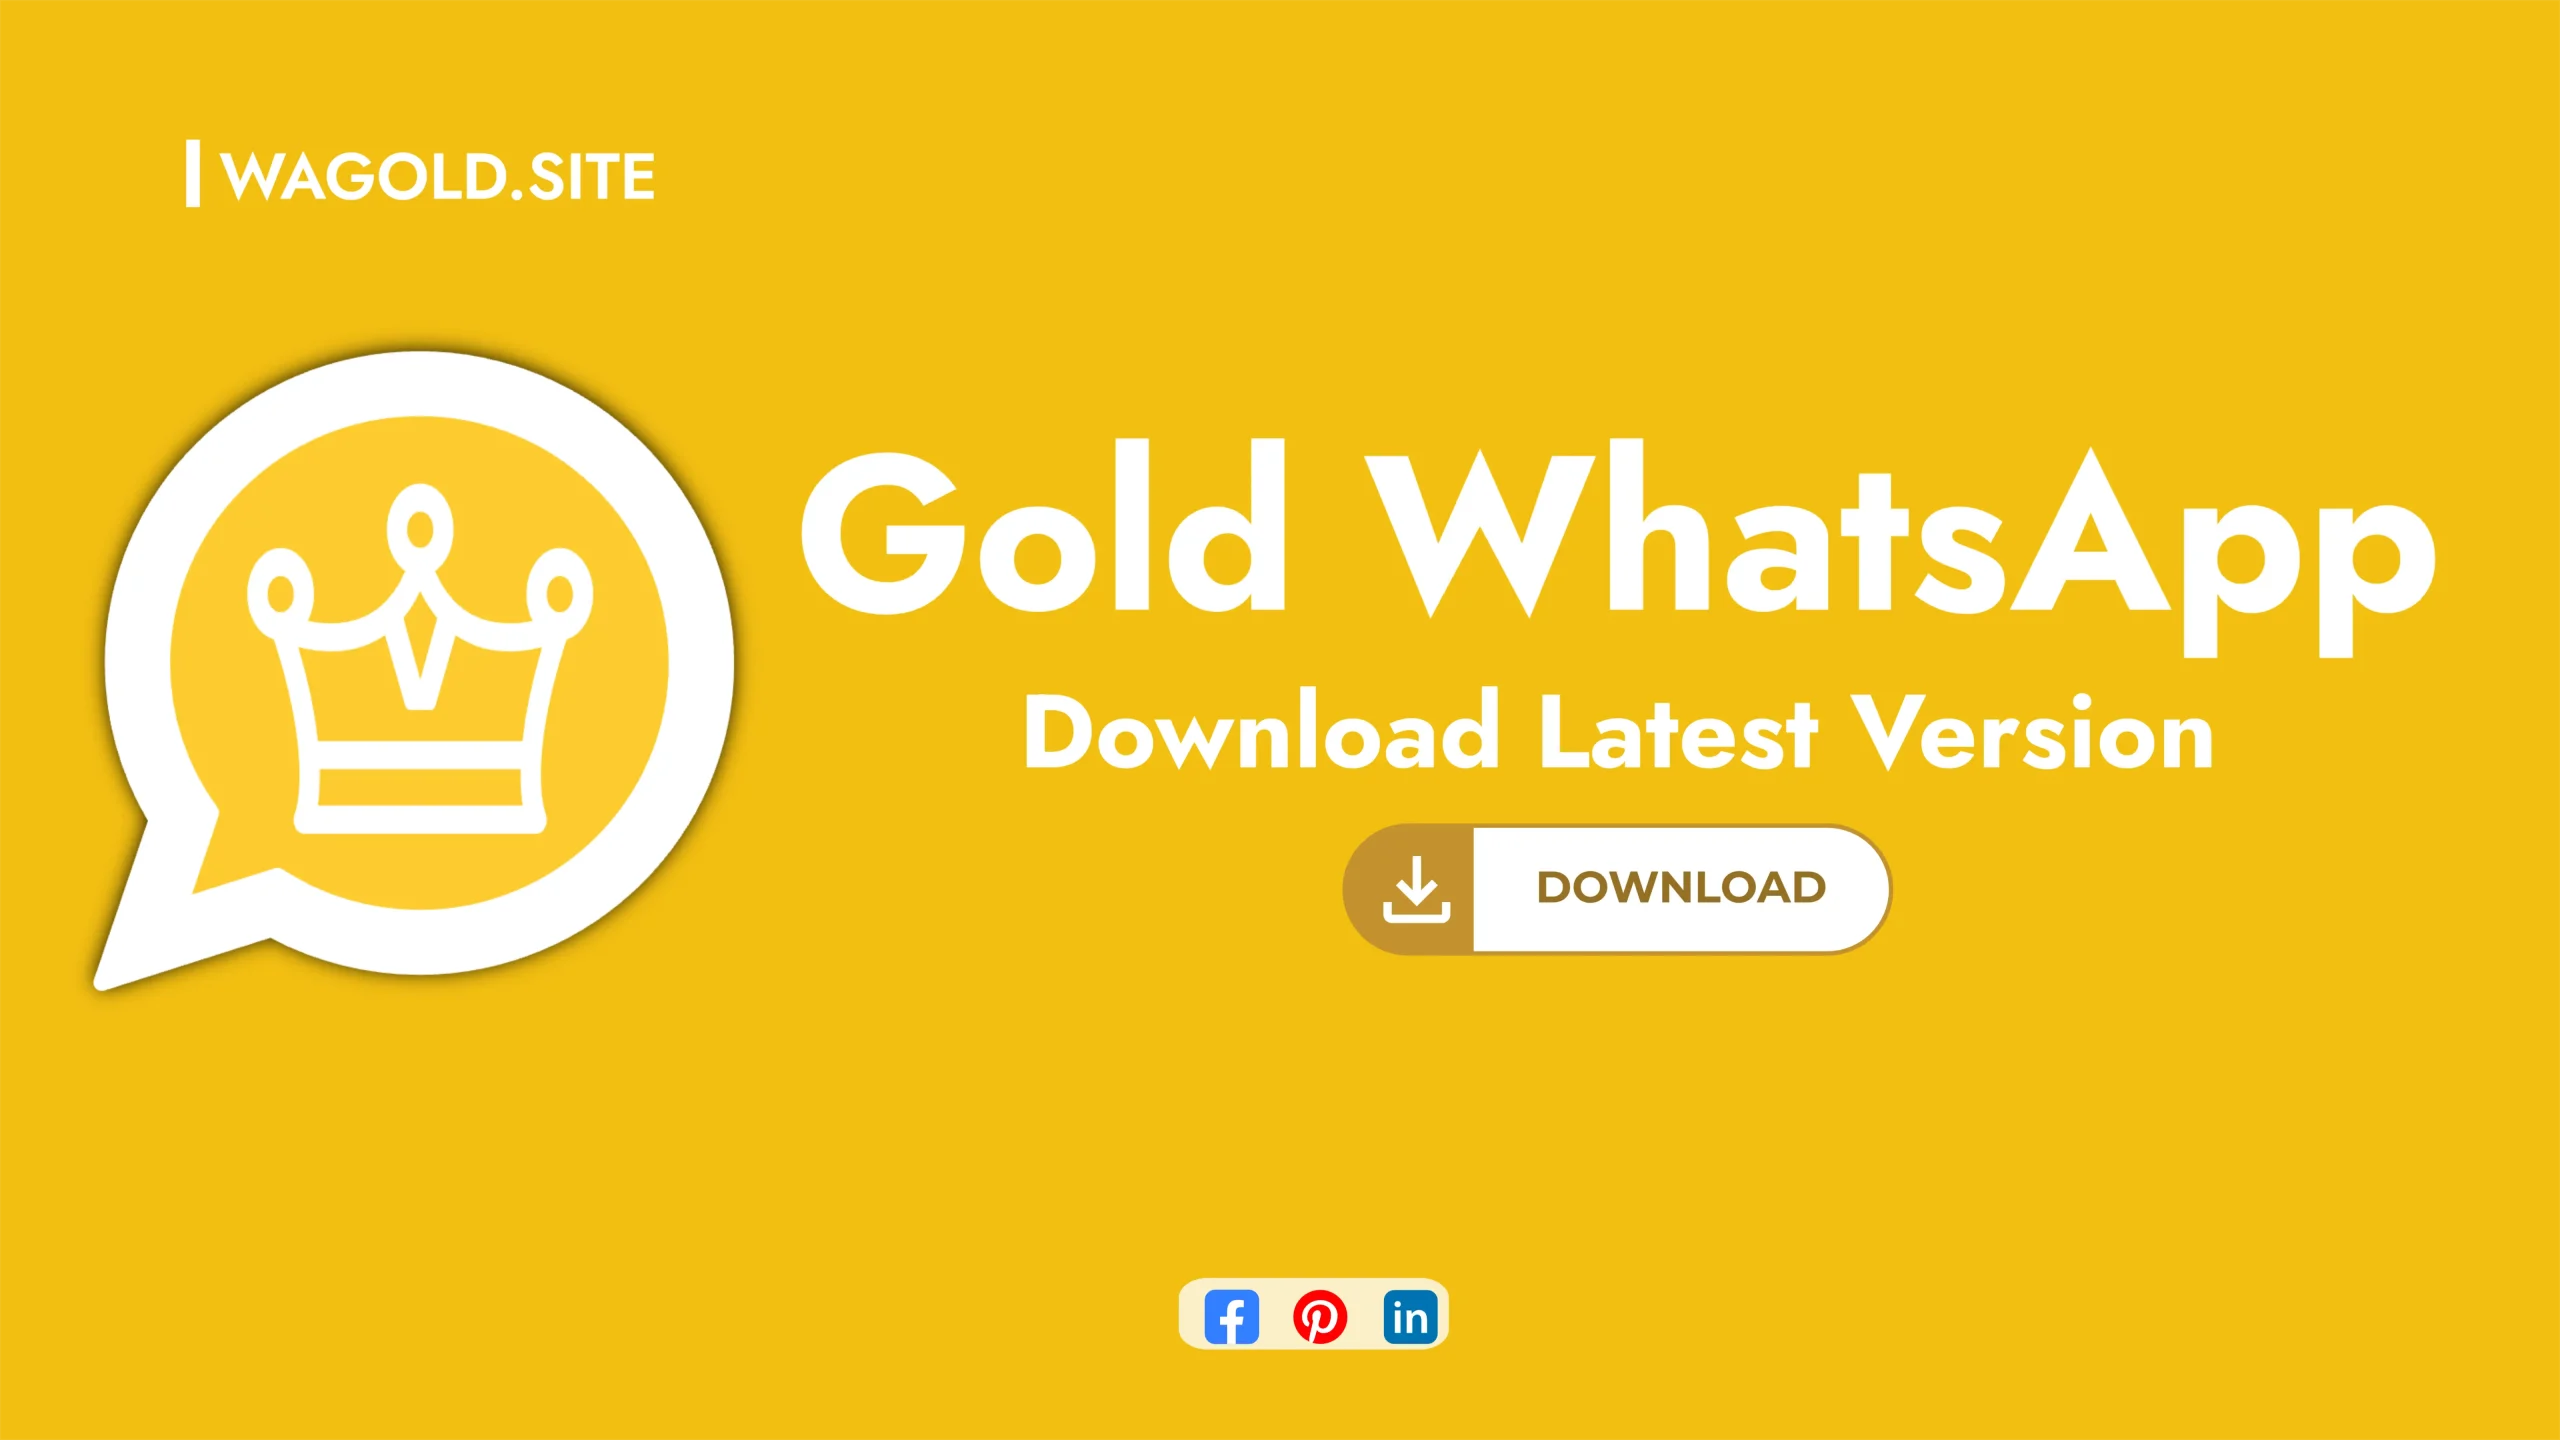 gold whatsapp - gold whatsapp apk downlaod - download gold apk - golden whatsapp - golden whatsapp apk - whatsapp apk gold - arabic whatsapp gold